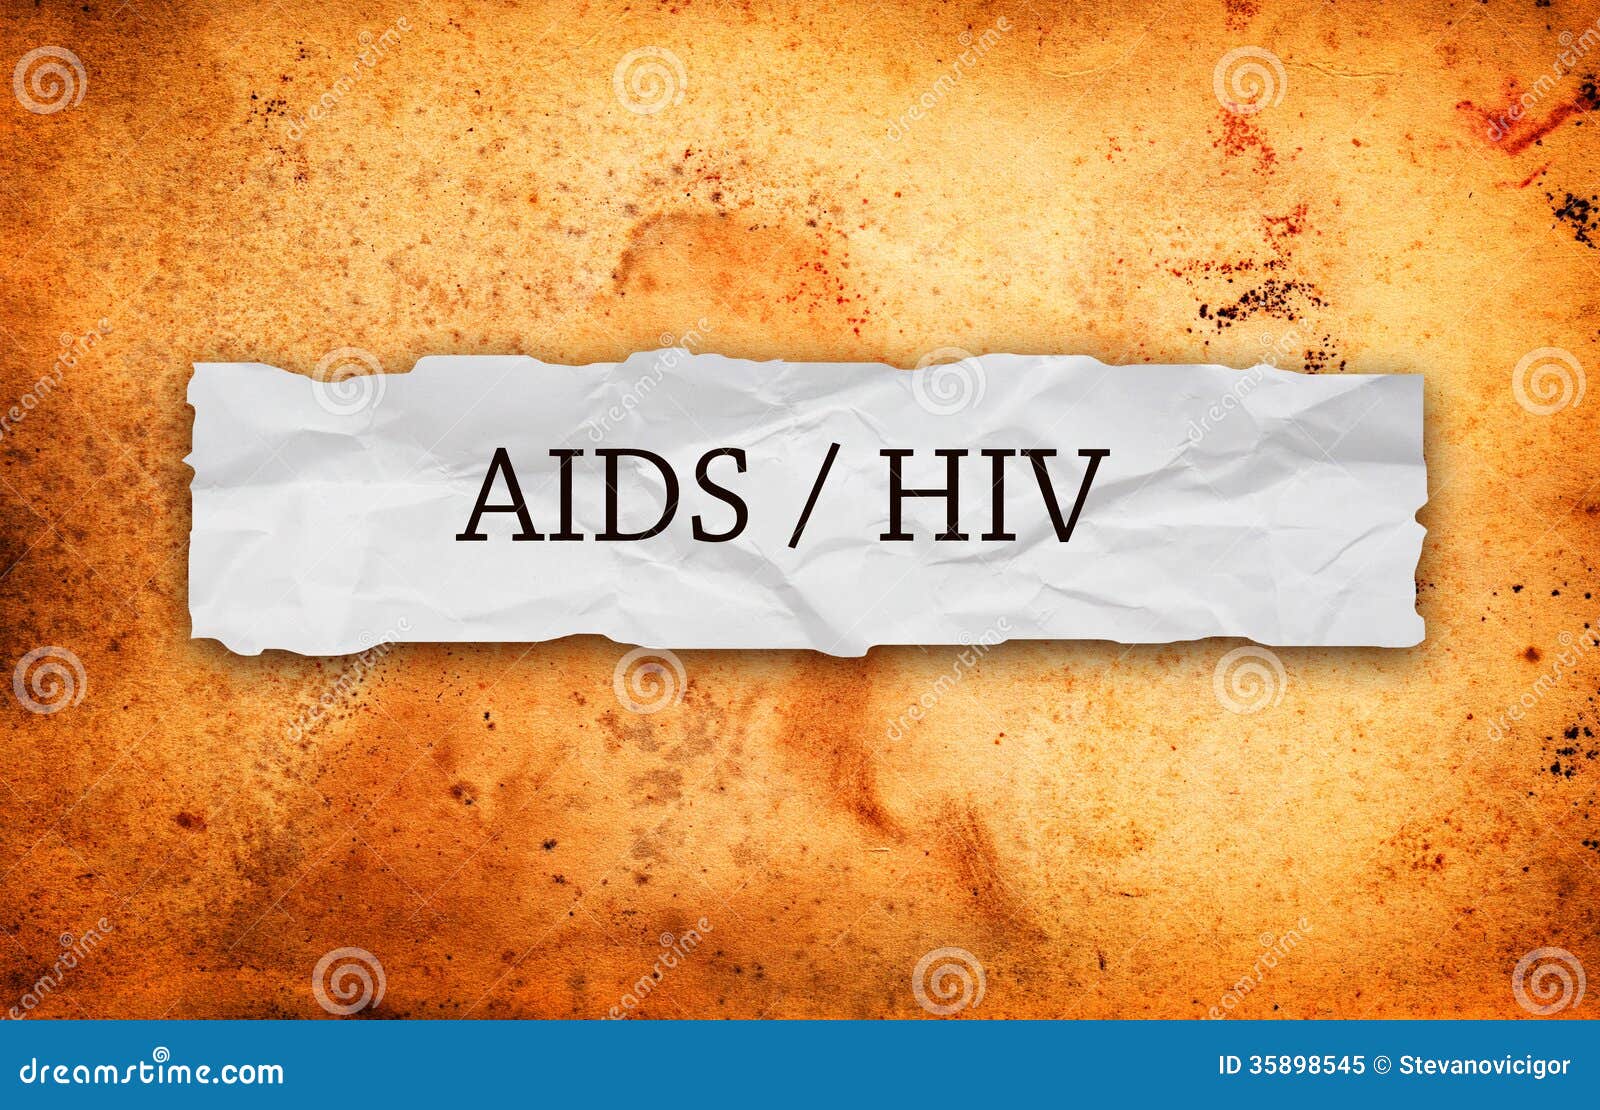 dissertation topics on hiv/aids